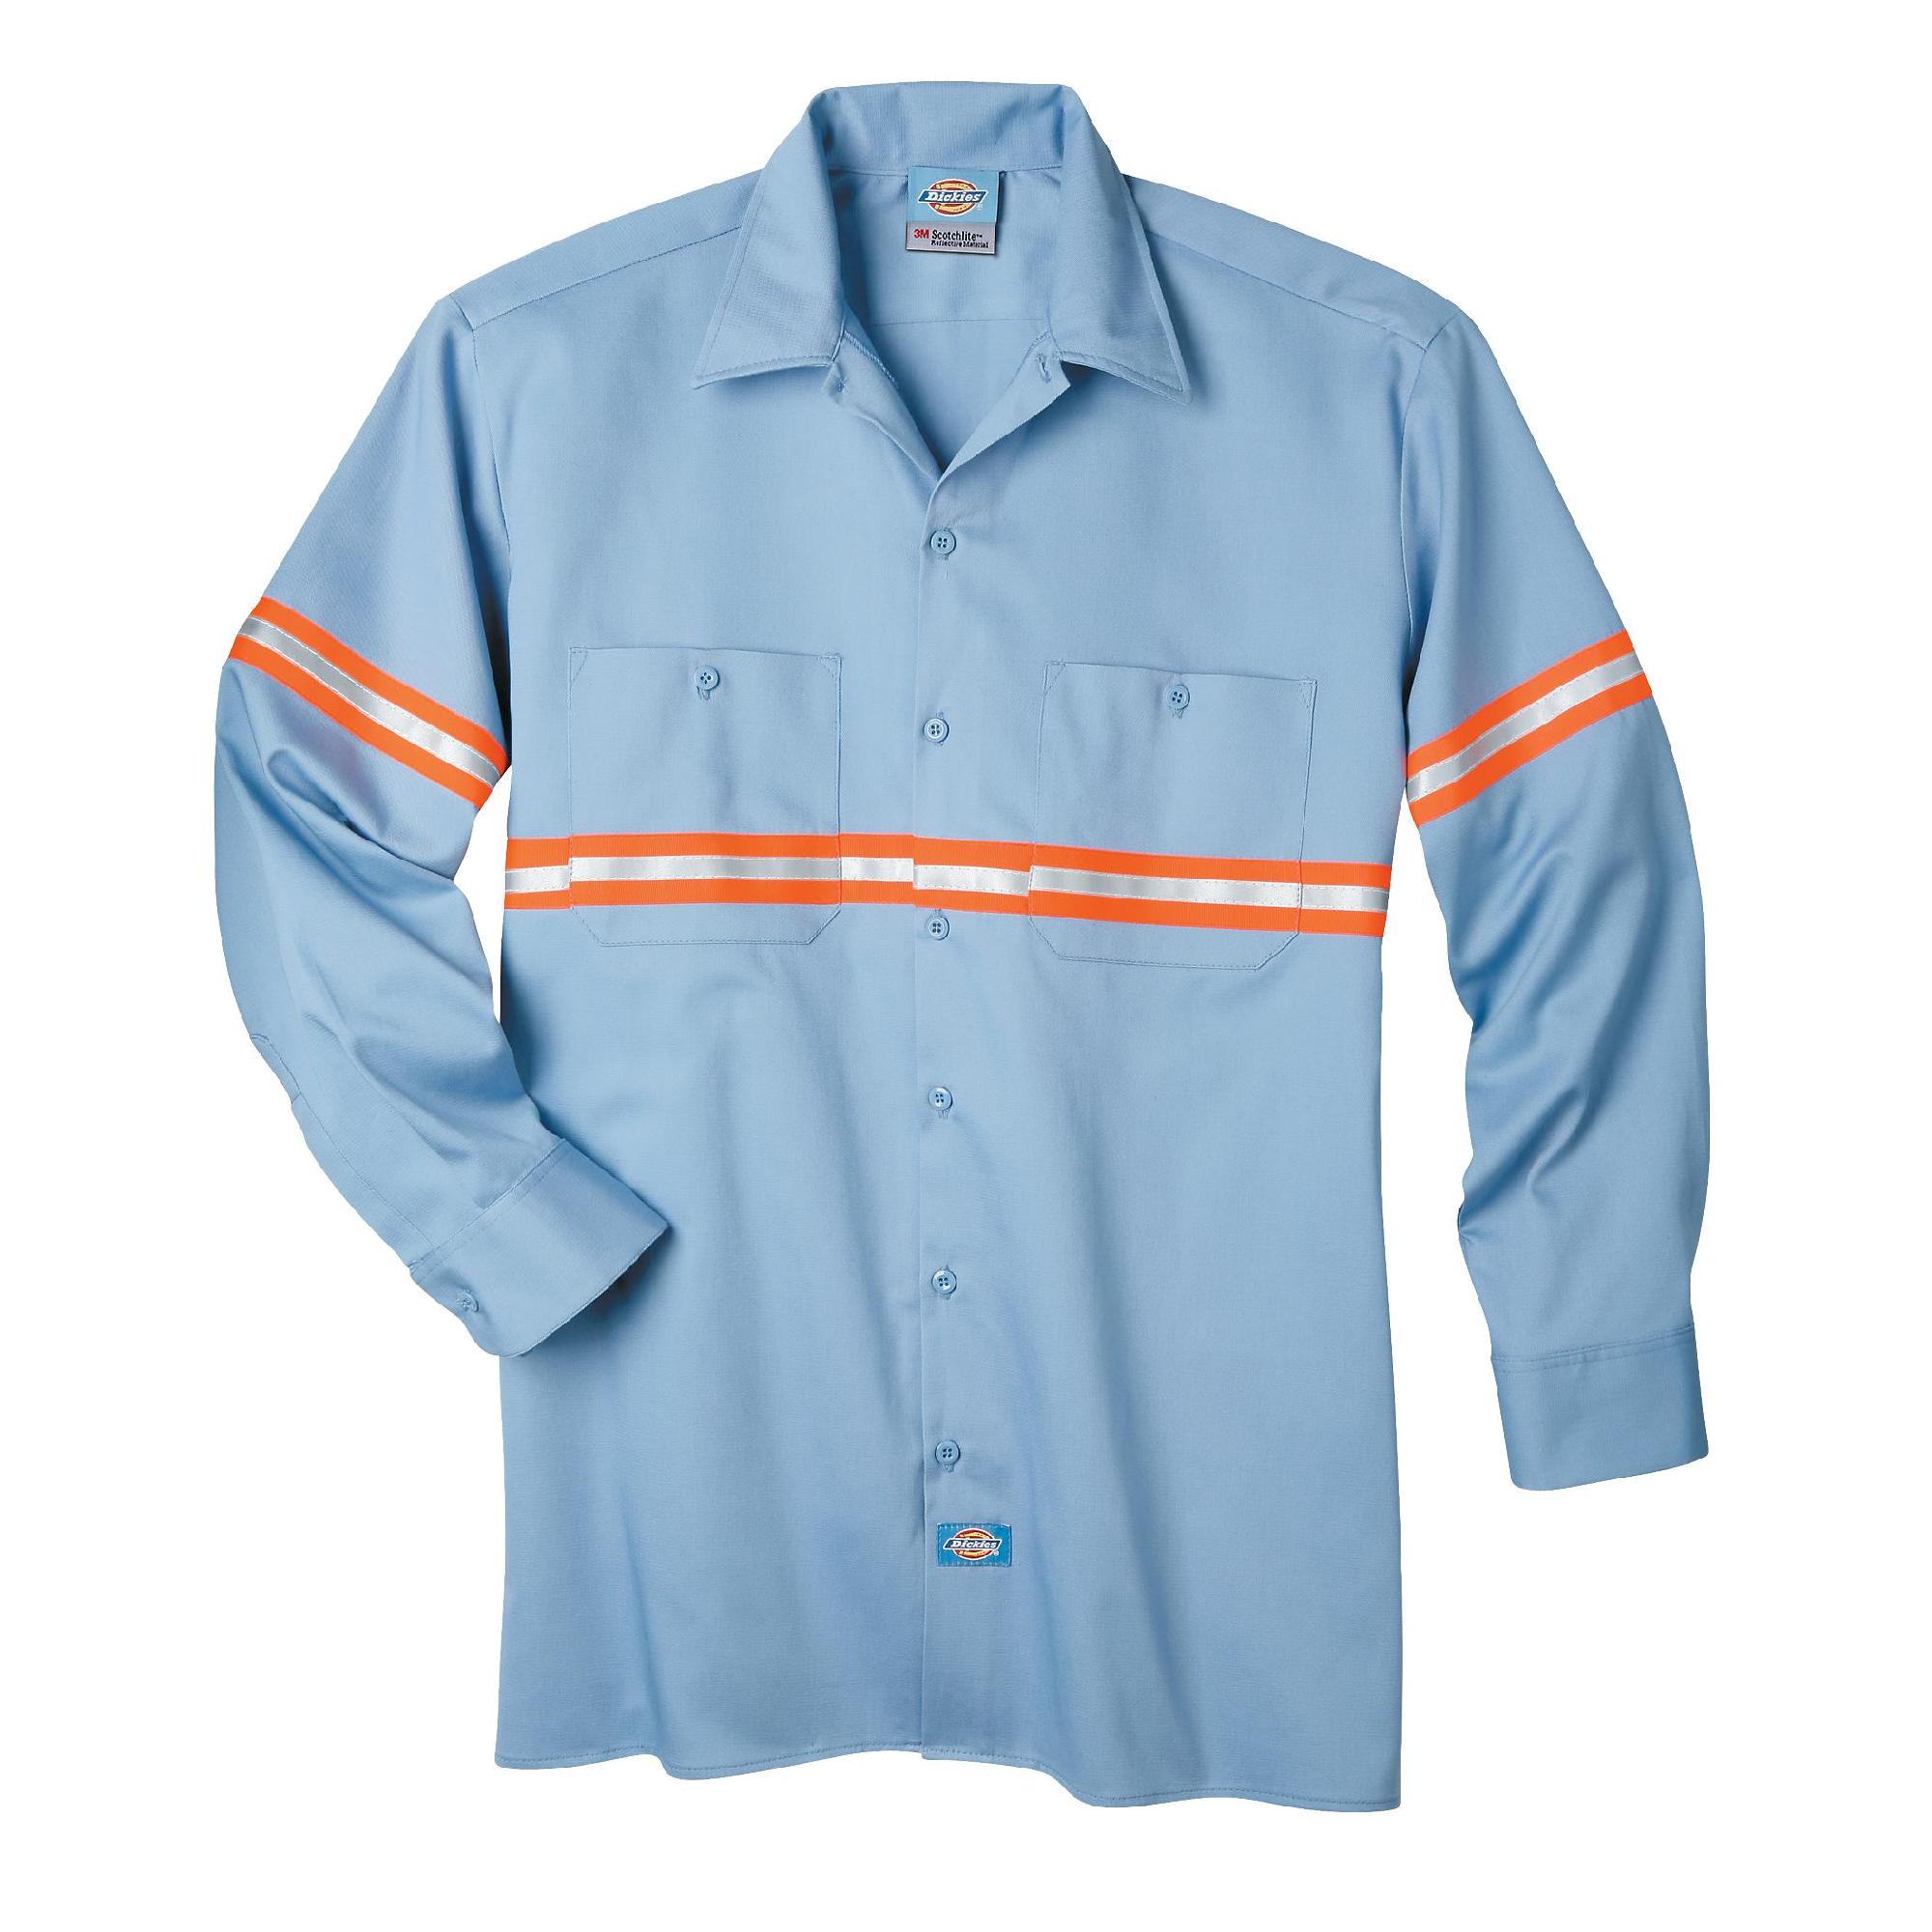 Men's Long Sleeve Work Shirt Non-ANSI VL101